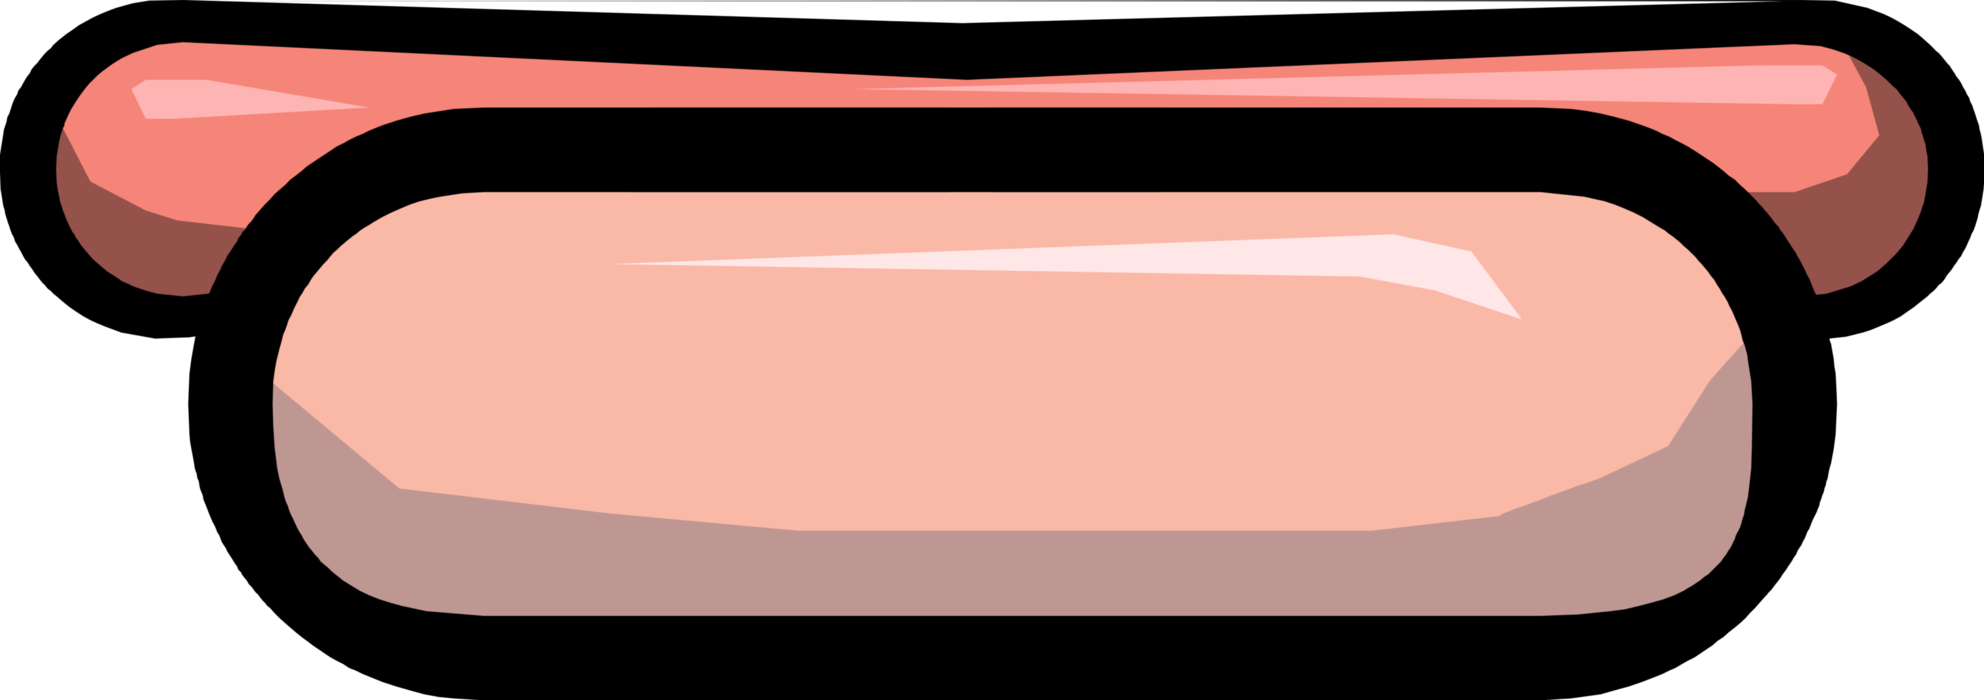 Vector Illustration of Anthropomorphic Cooked Hot Dog or Hotdog Frankfurter Sausage Street Food on Bun